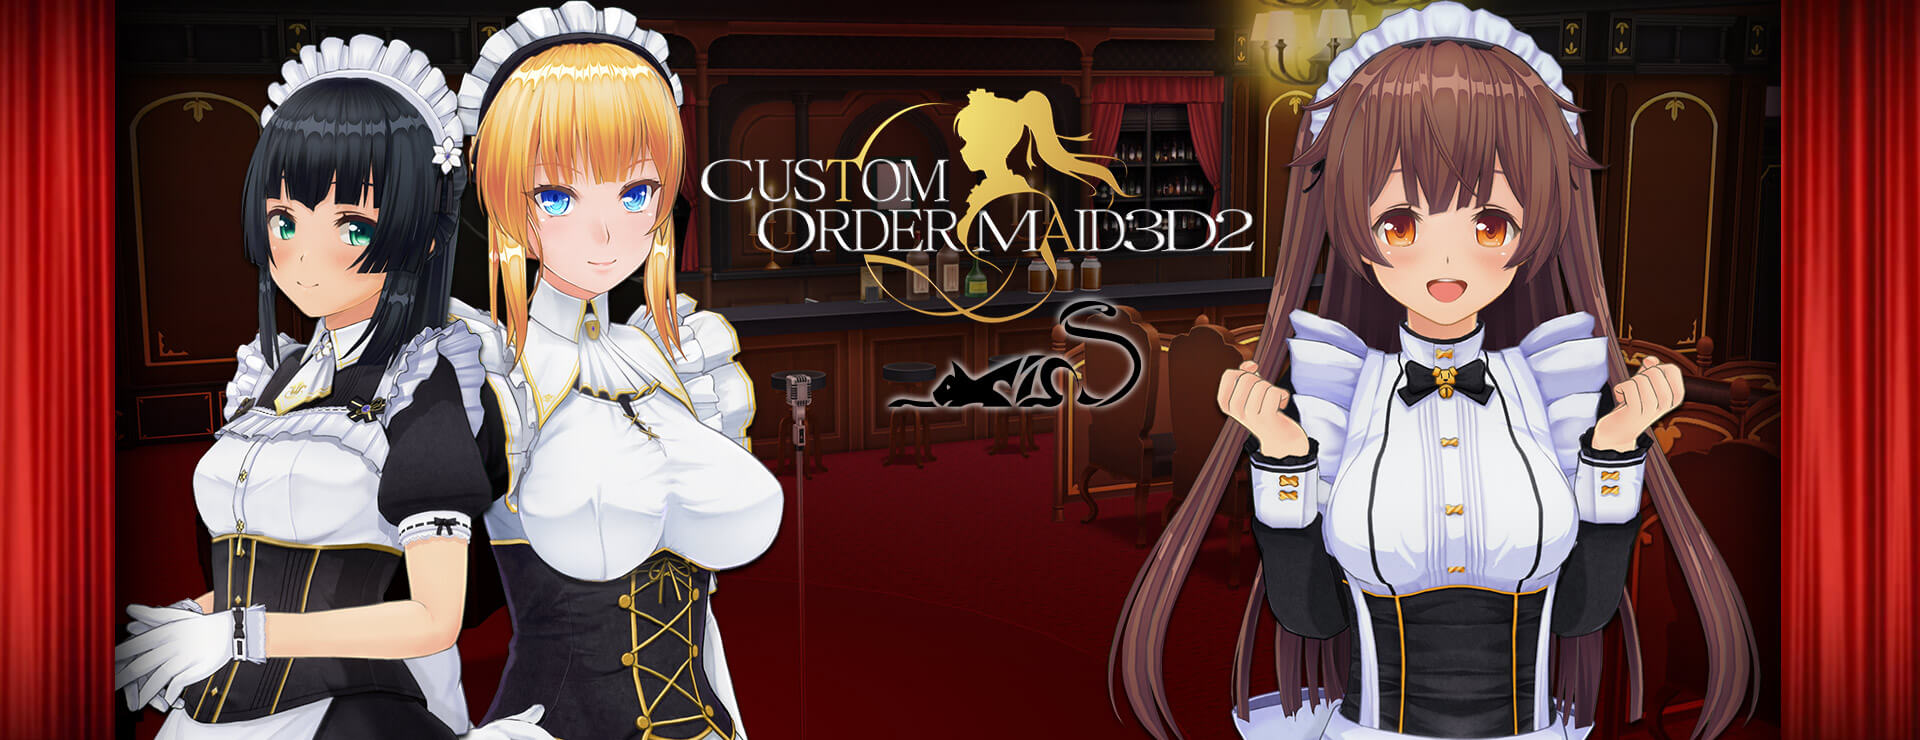 Custom Order Maid 3D2 Game - シミュレーション ゲーム